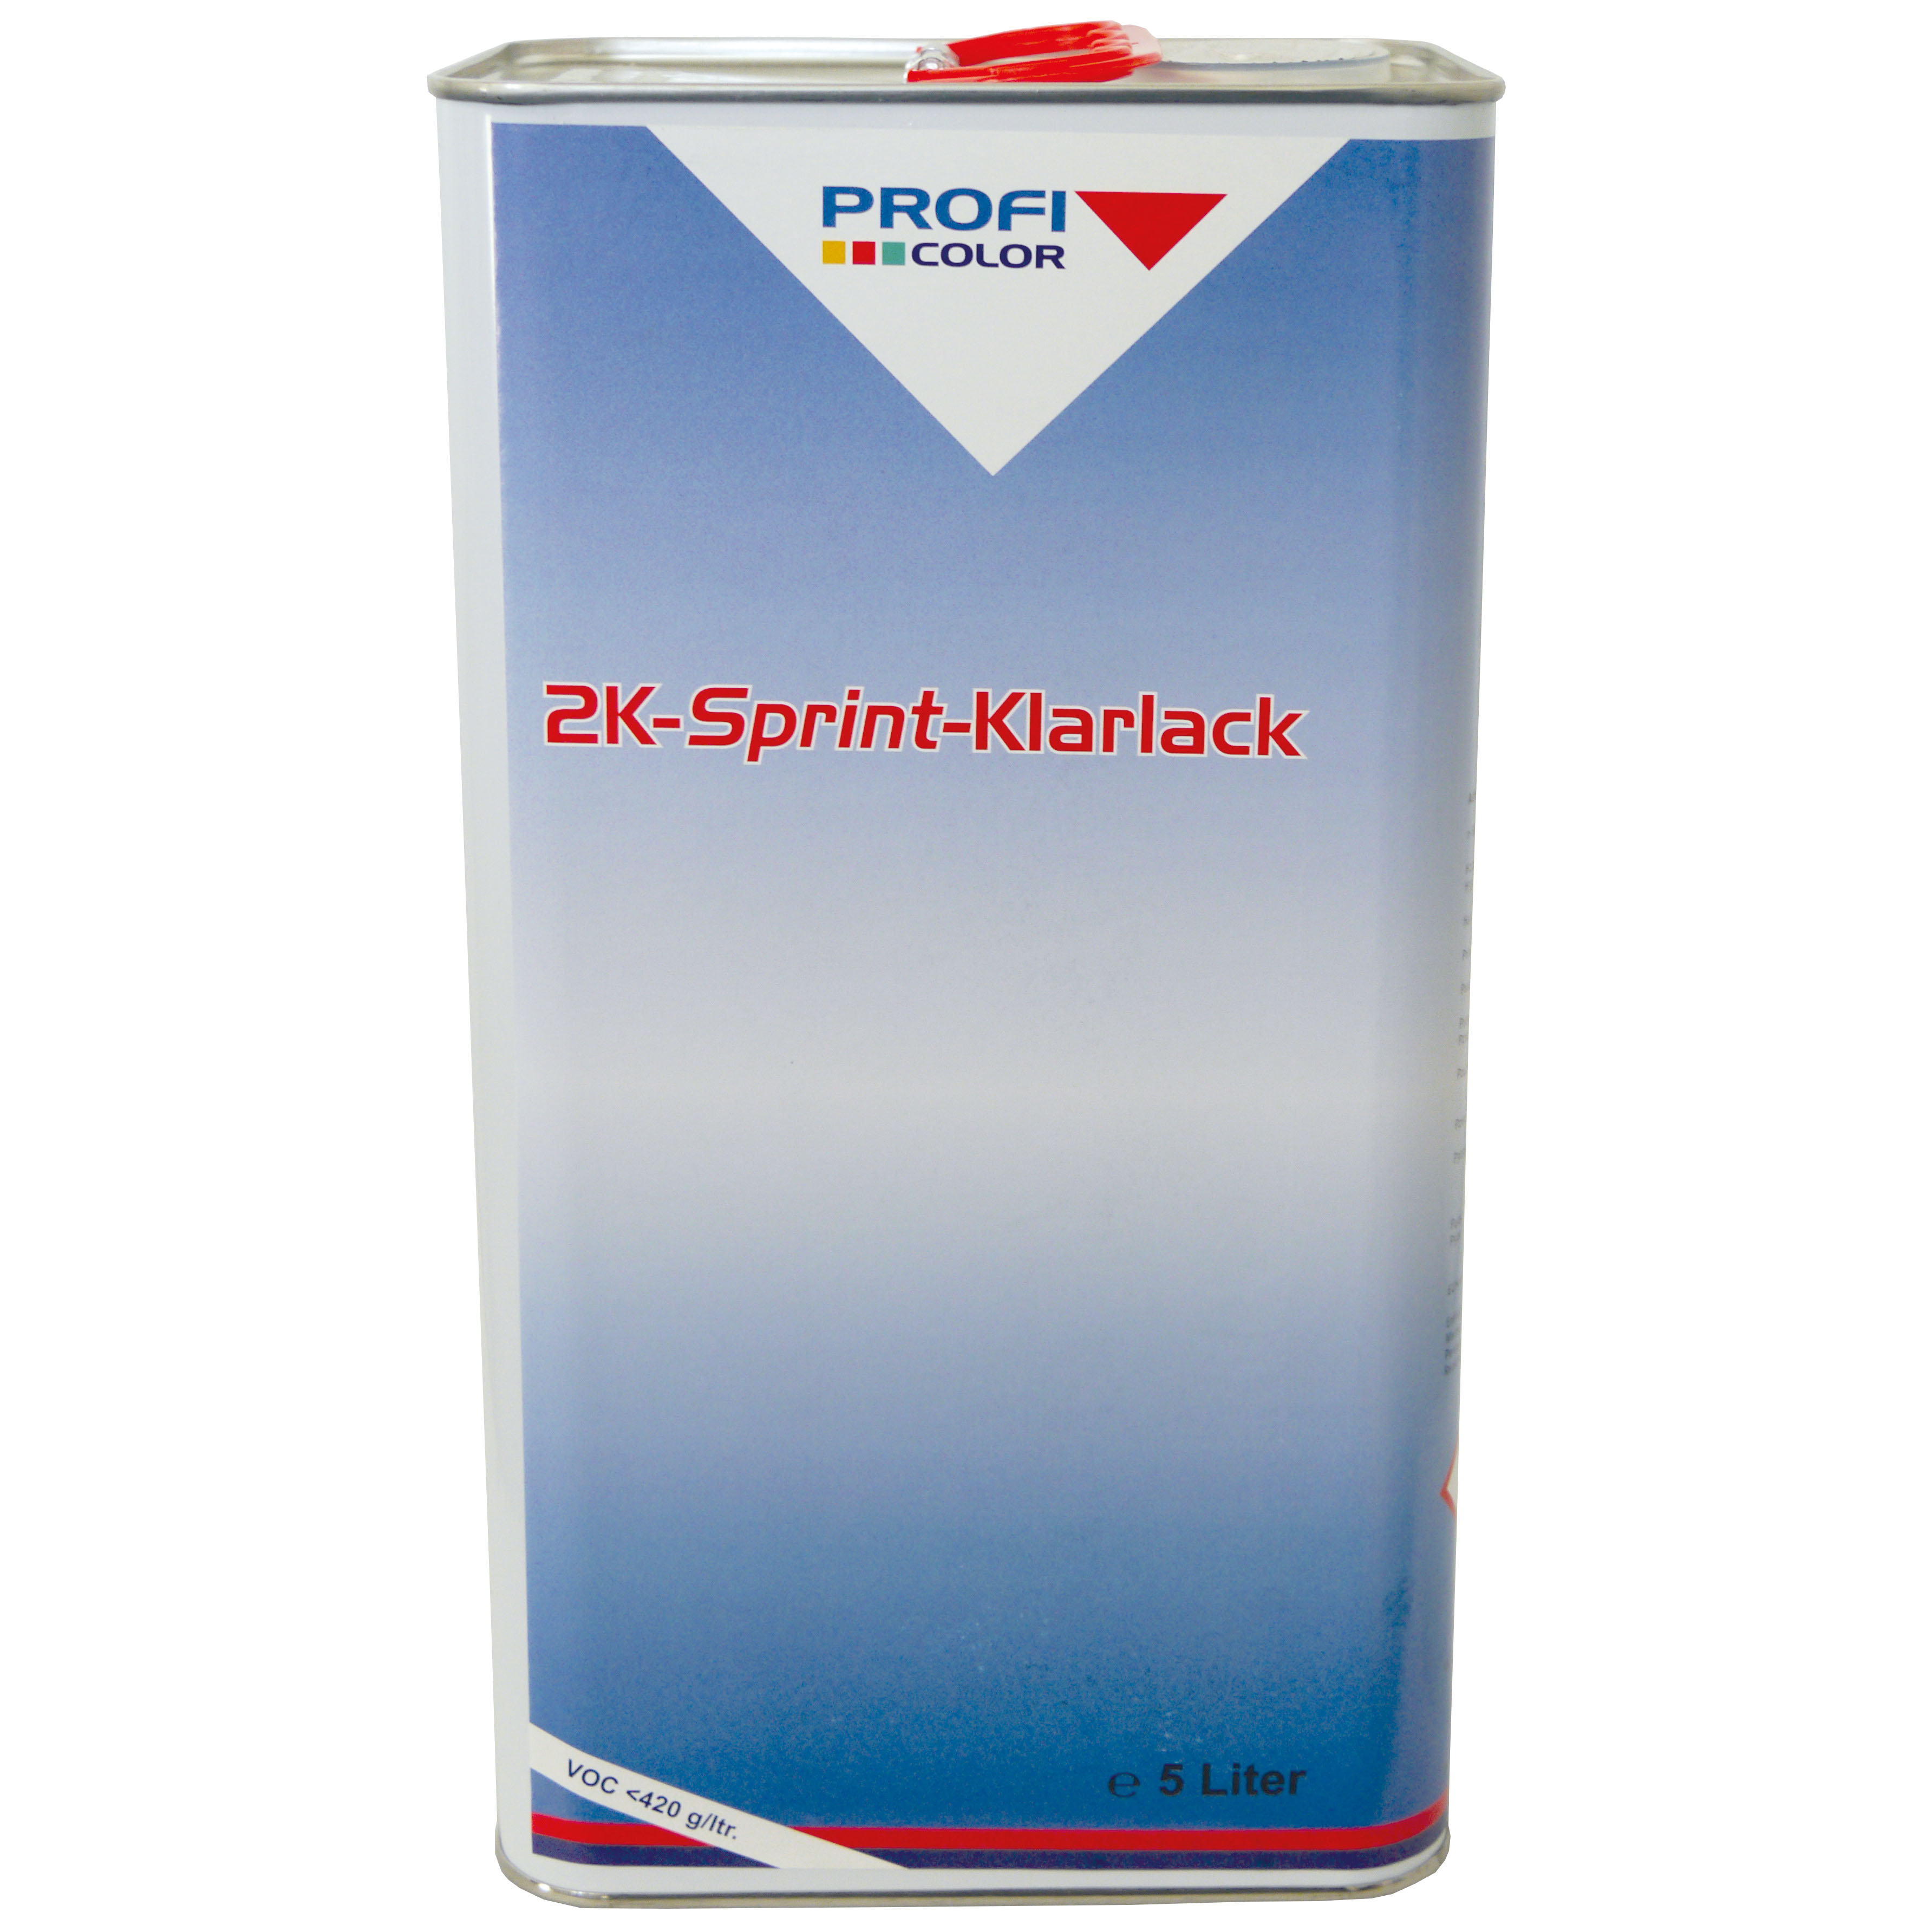 Profi Color 2K-Sprint-Klarlack, 5l